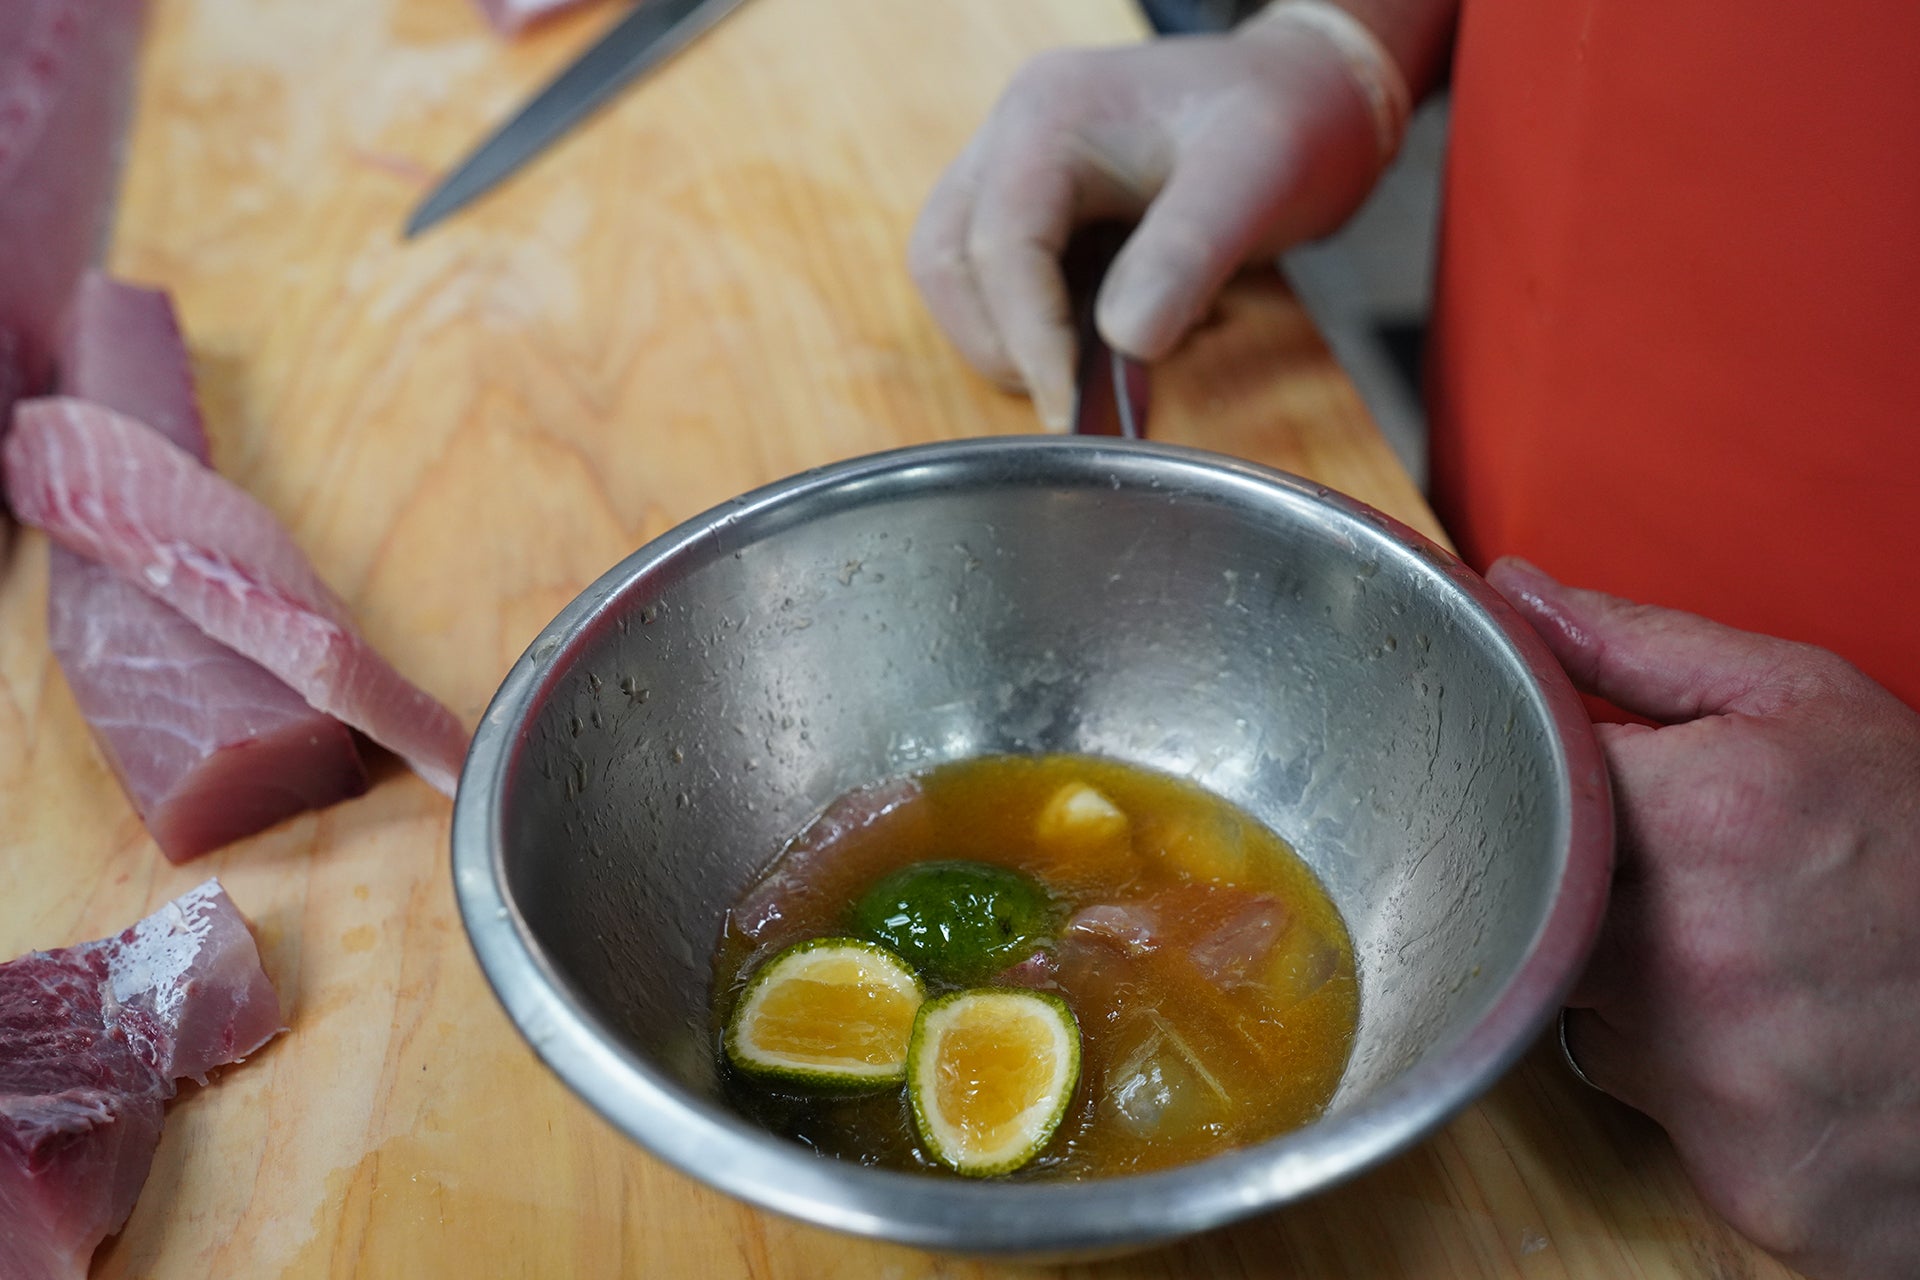 Sashimi in a bowl of marinade